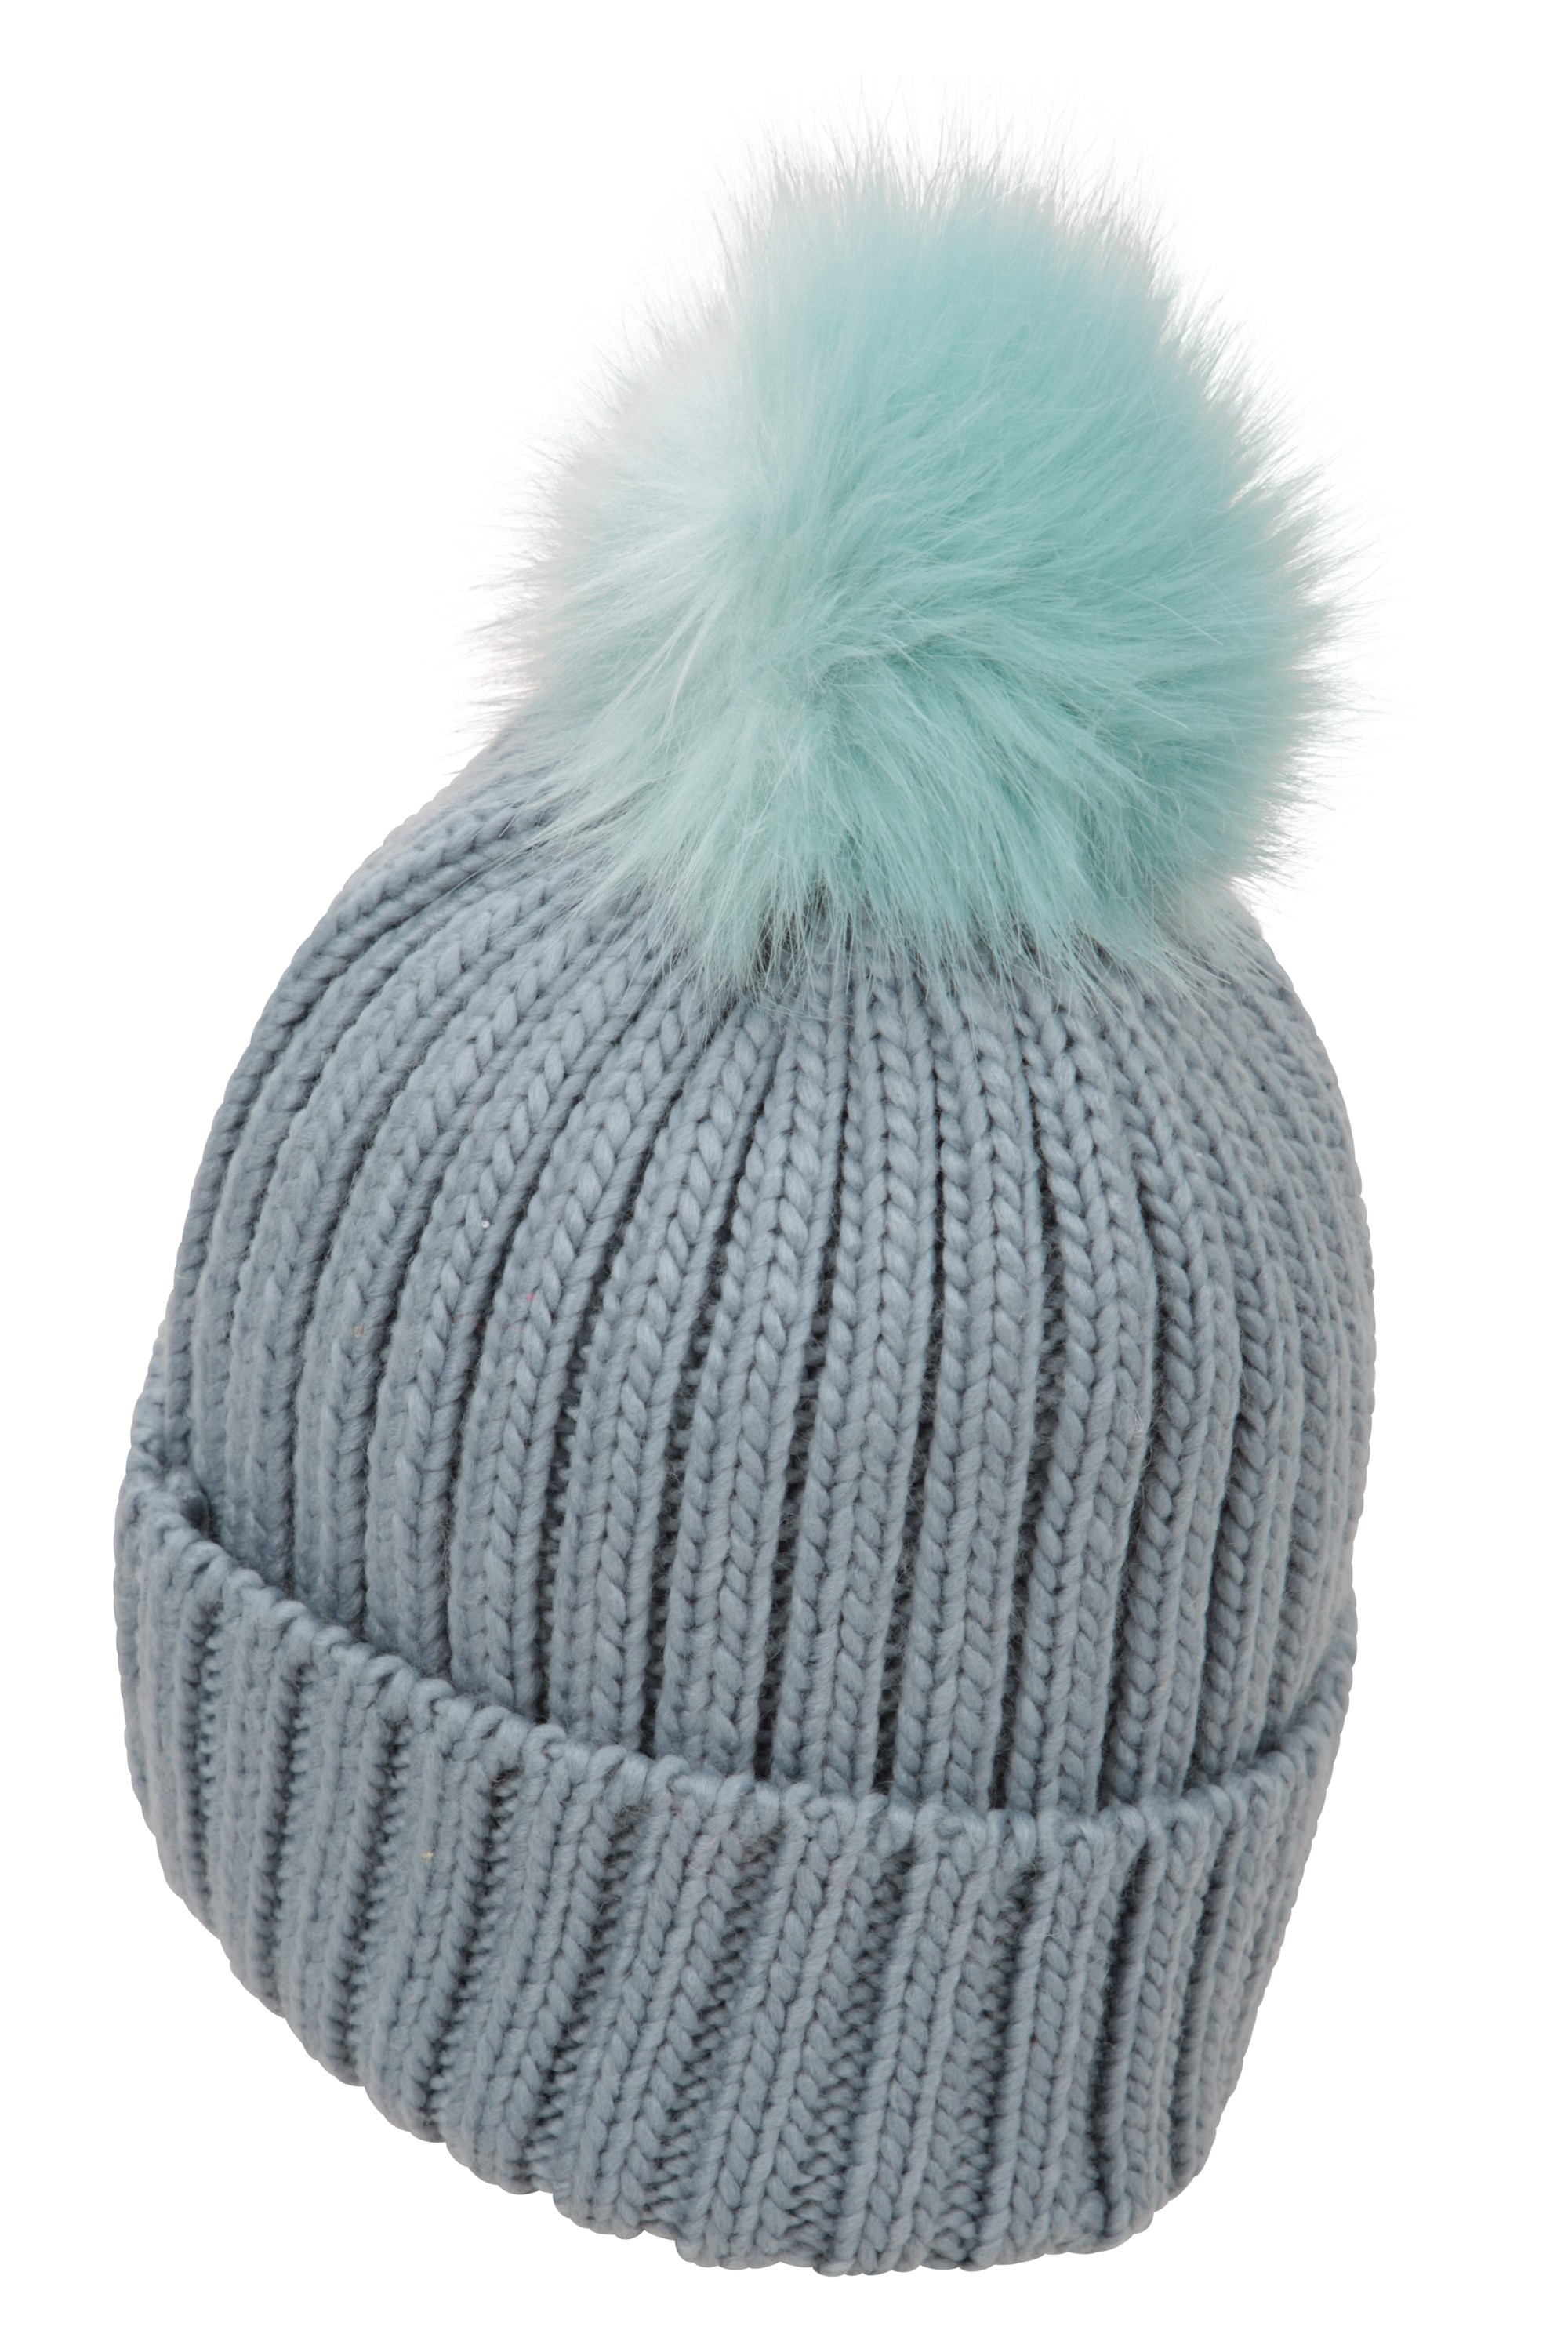 Mountain Warehouse Ski beanie hat winter hat soft fleece hat pink size small to medium Ladies. 